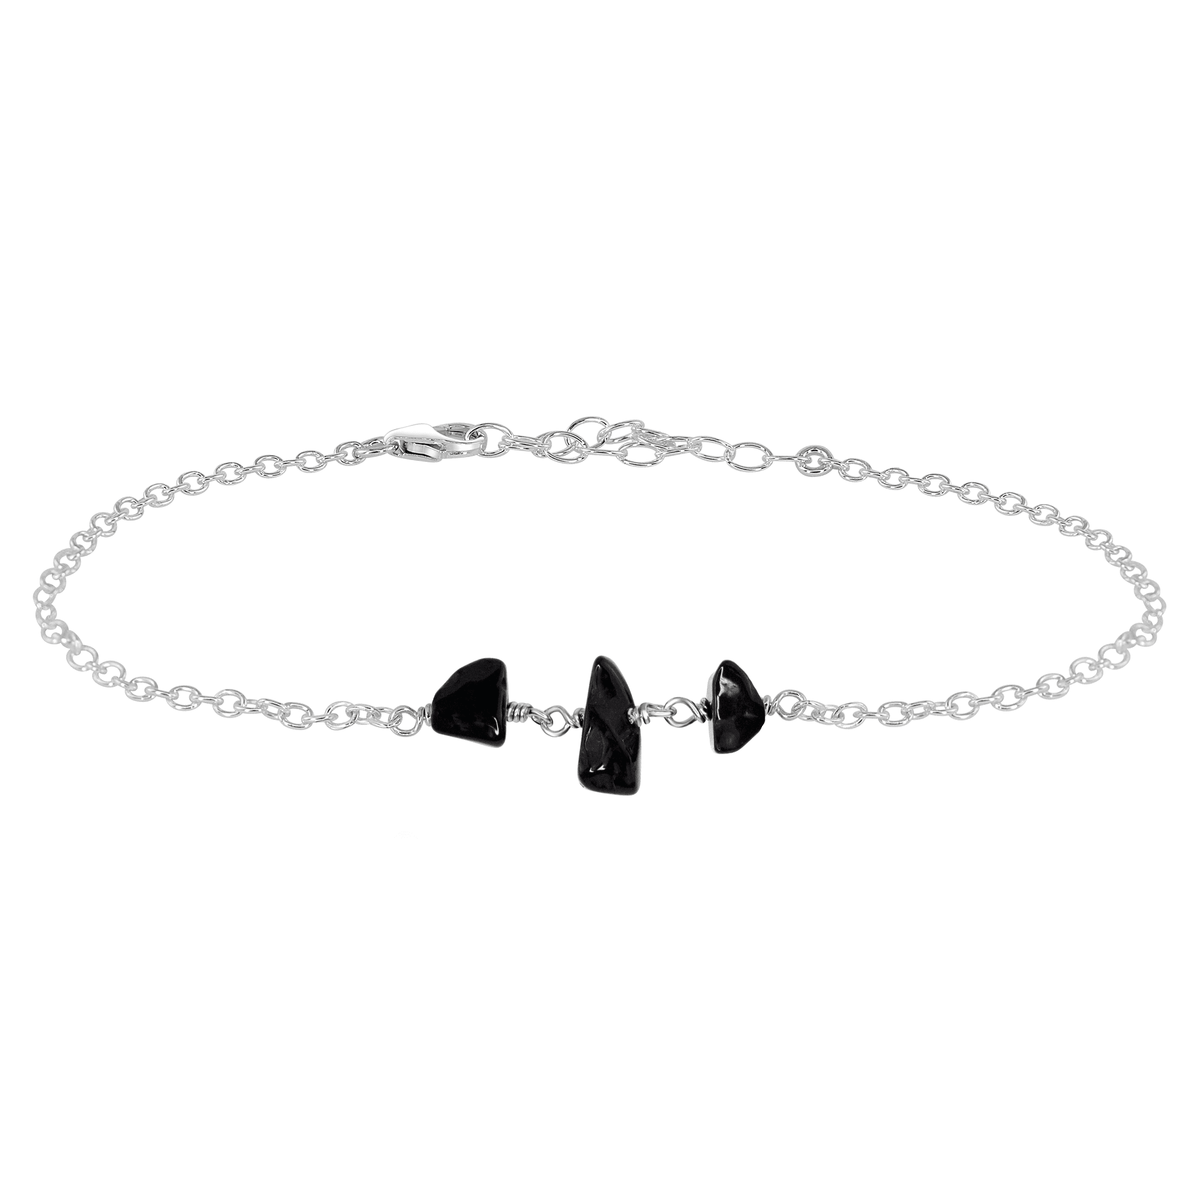 Beaded Chain Anklet - Black Onyx - Sterling Silver - Luna Tide Handmade Jewellery